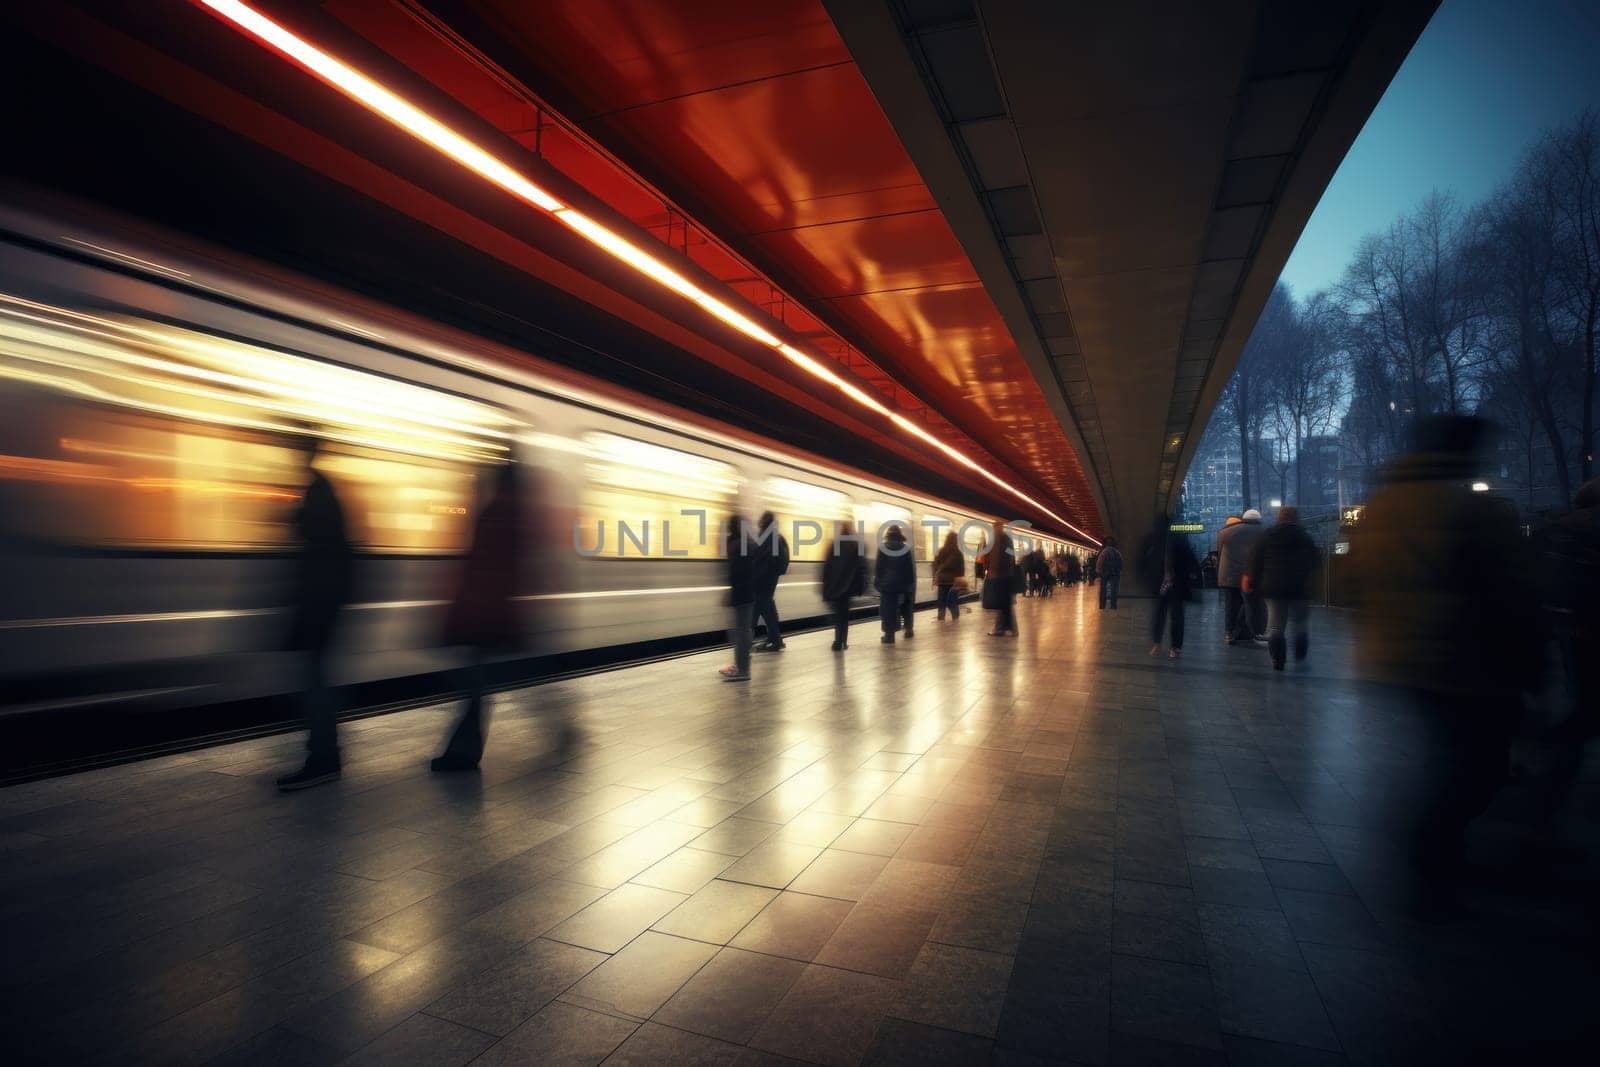 Long exposure Subway station, motion blur people by nijieimu